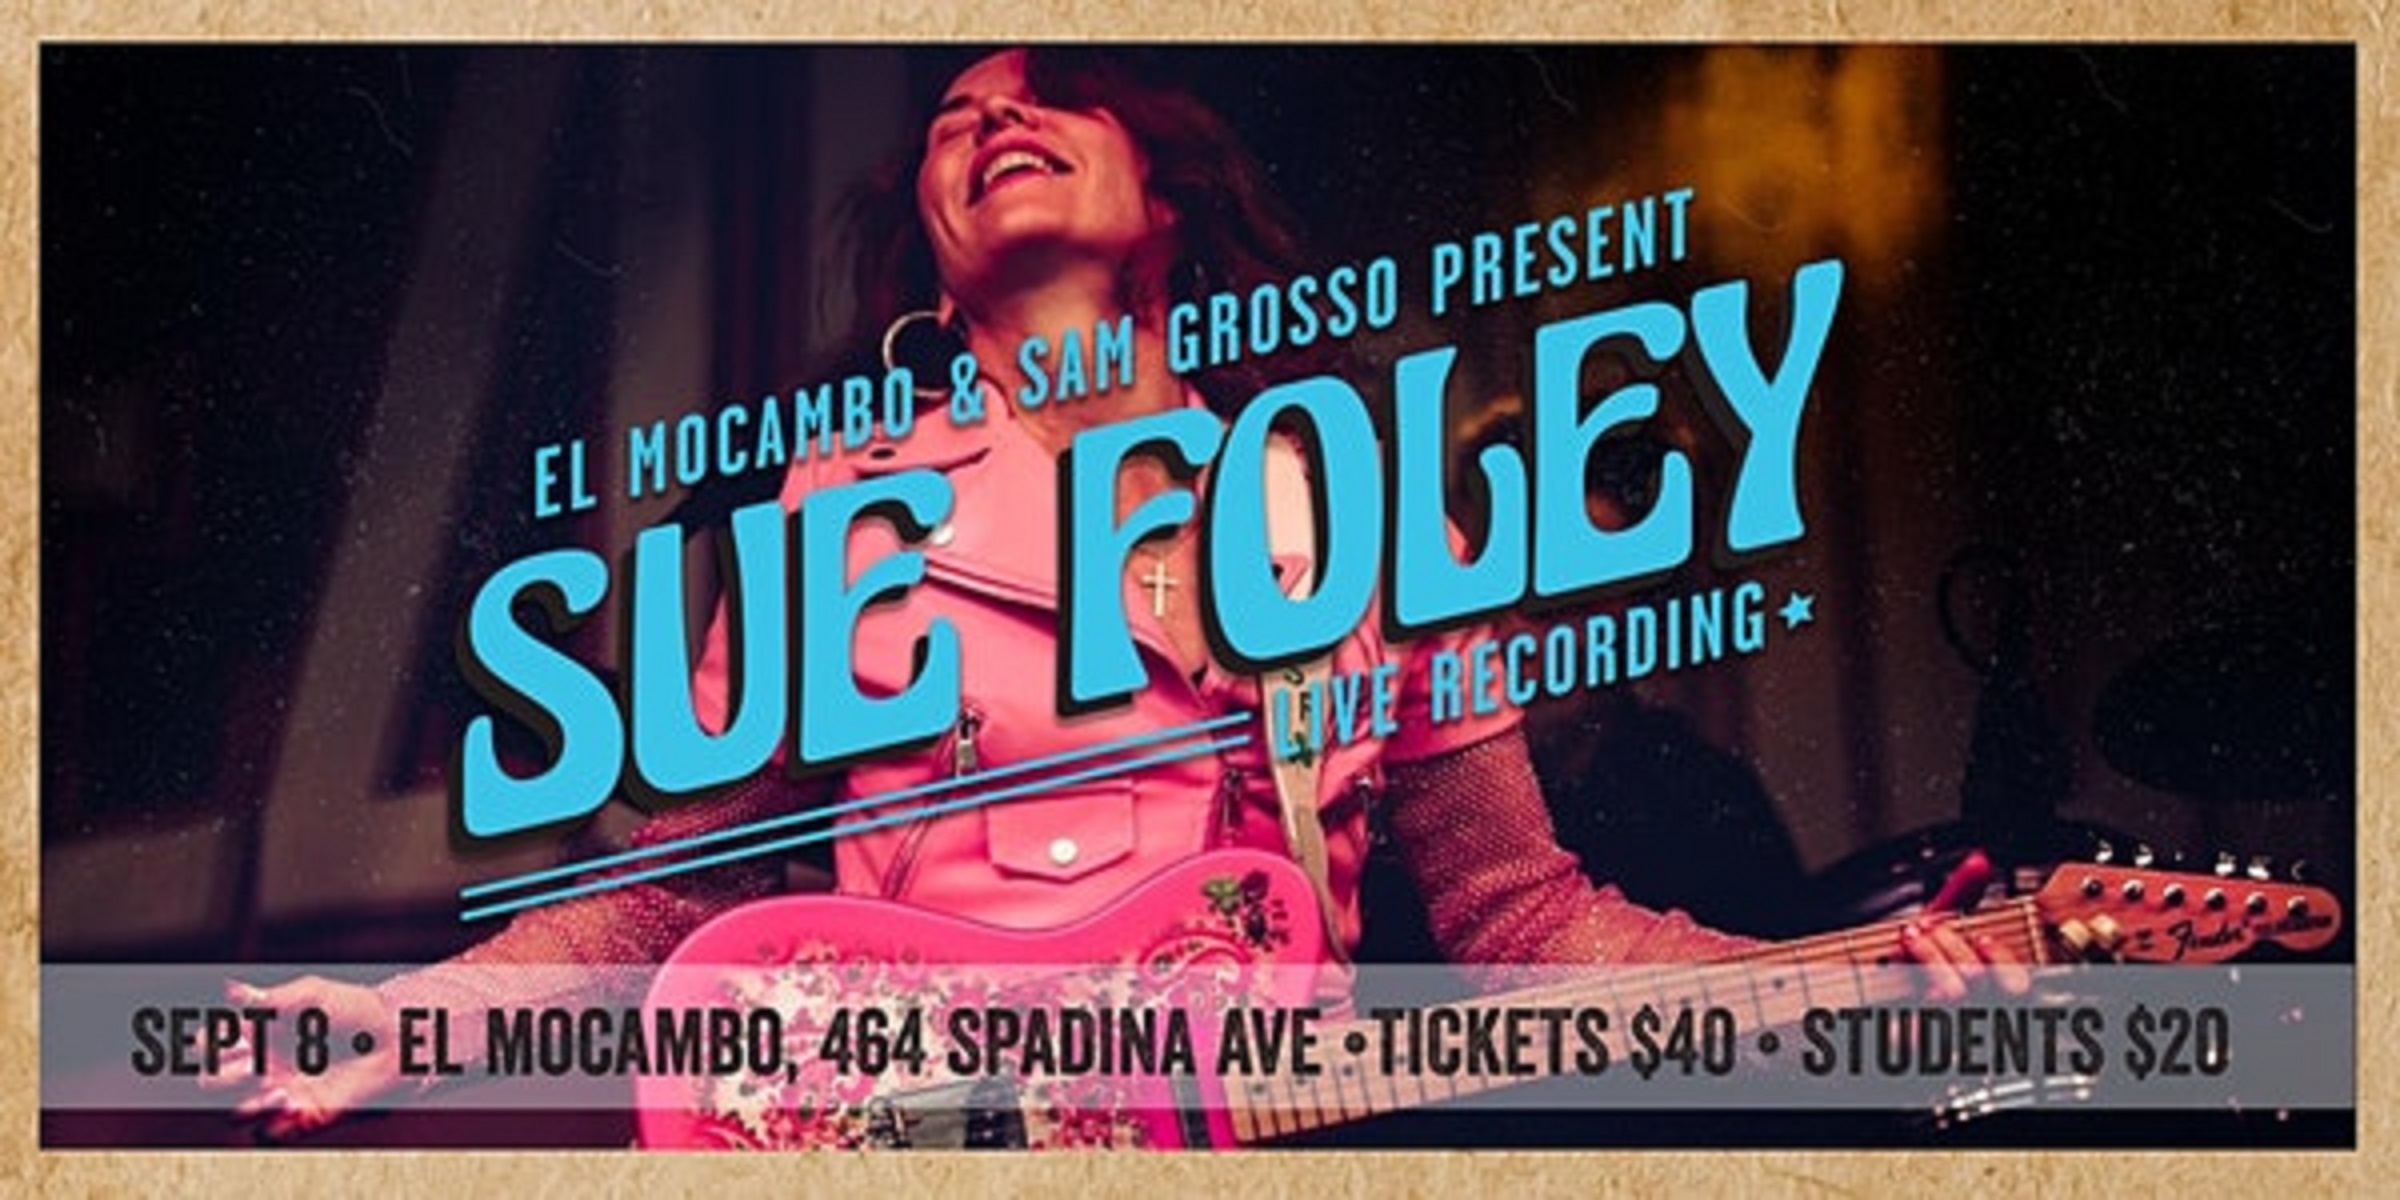 Multi-Award-Winning Blues Guitarist & Singer Sue Foley to Record New Live Album at El Mocambo